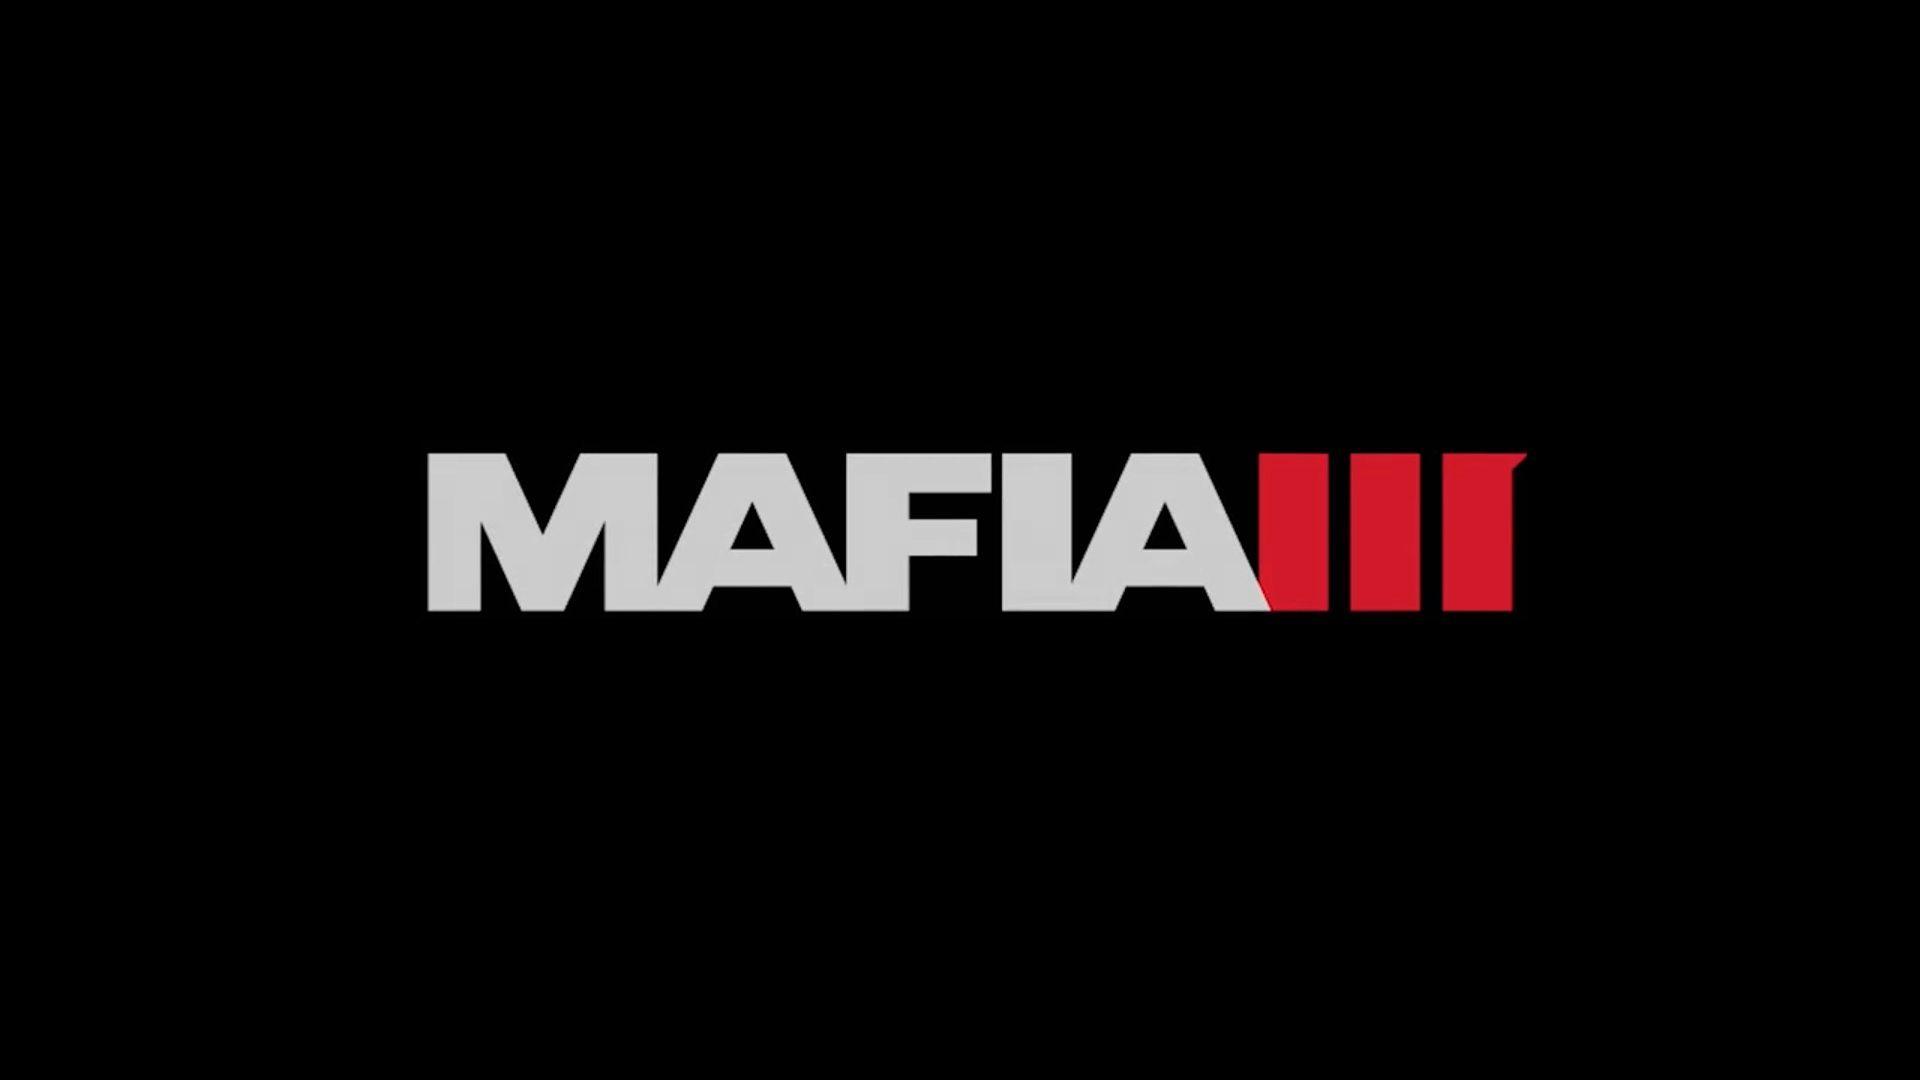 Mafia 3 Wallpaper For iPhone Sdeerwallpaper. L